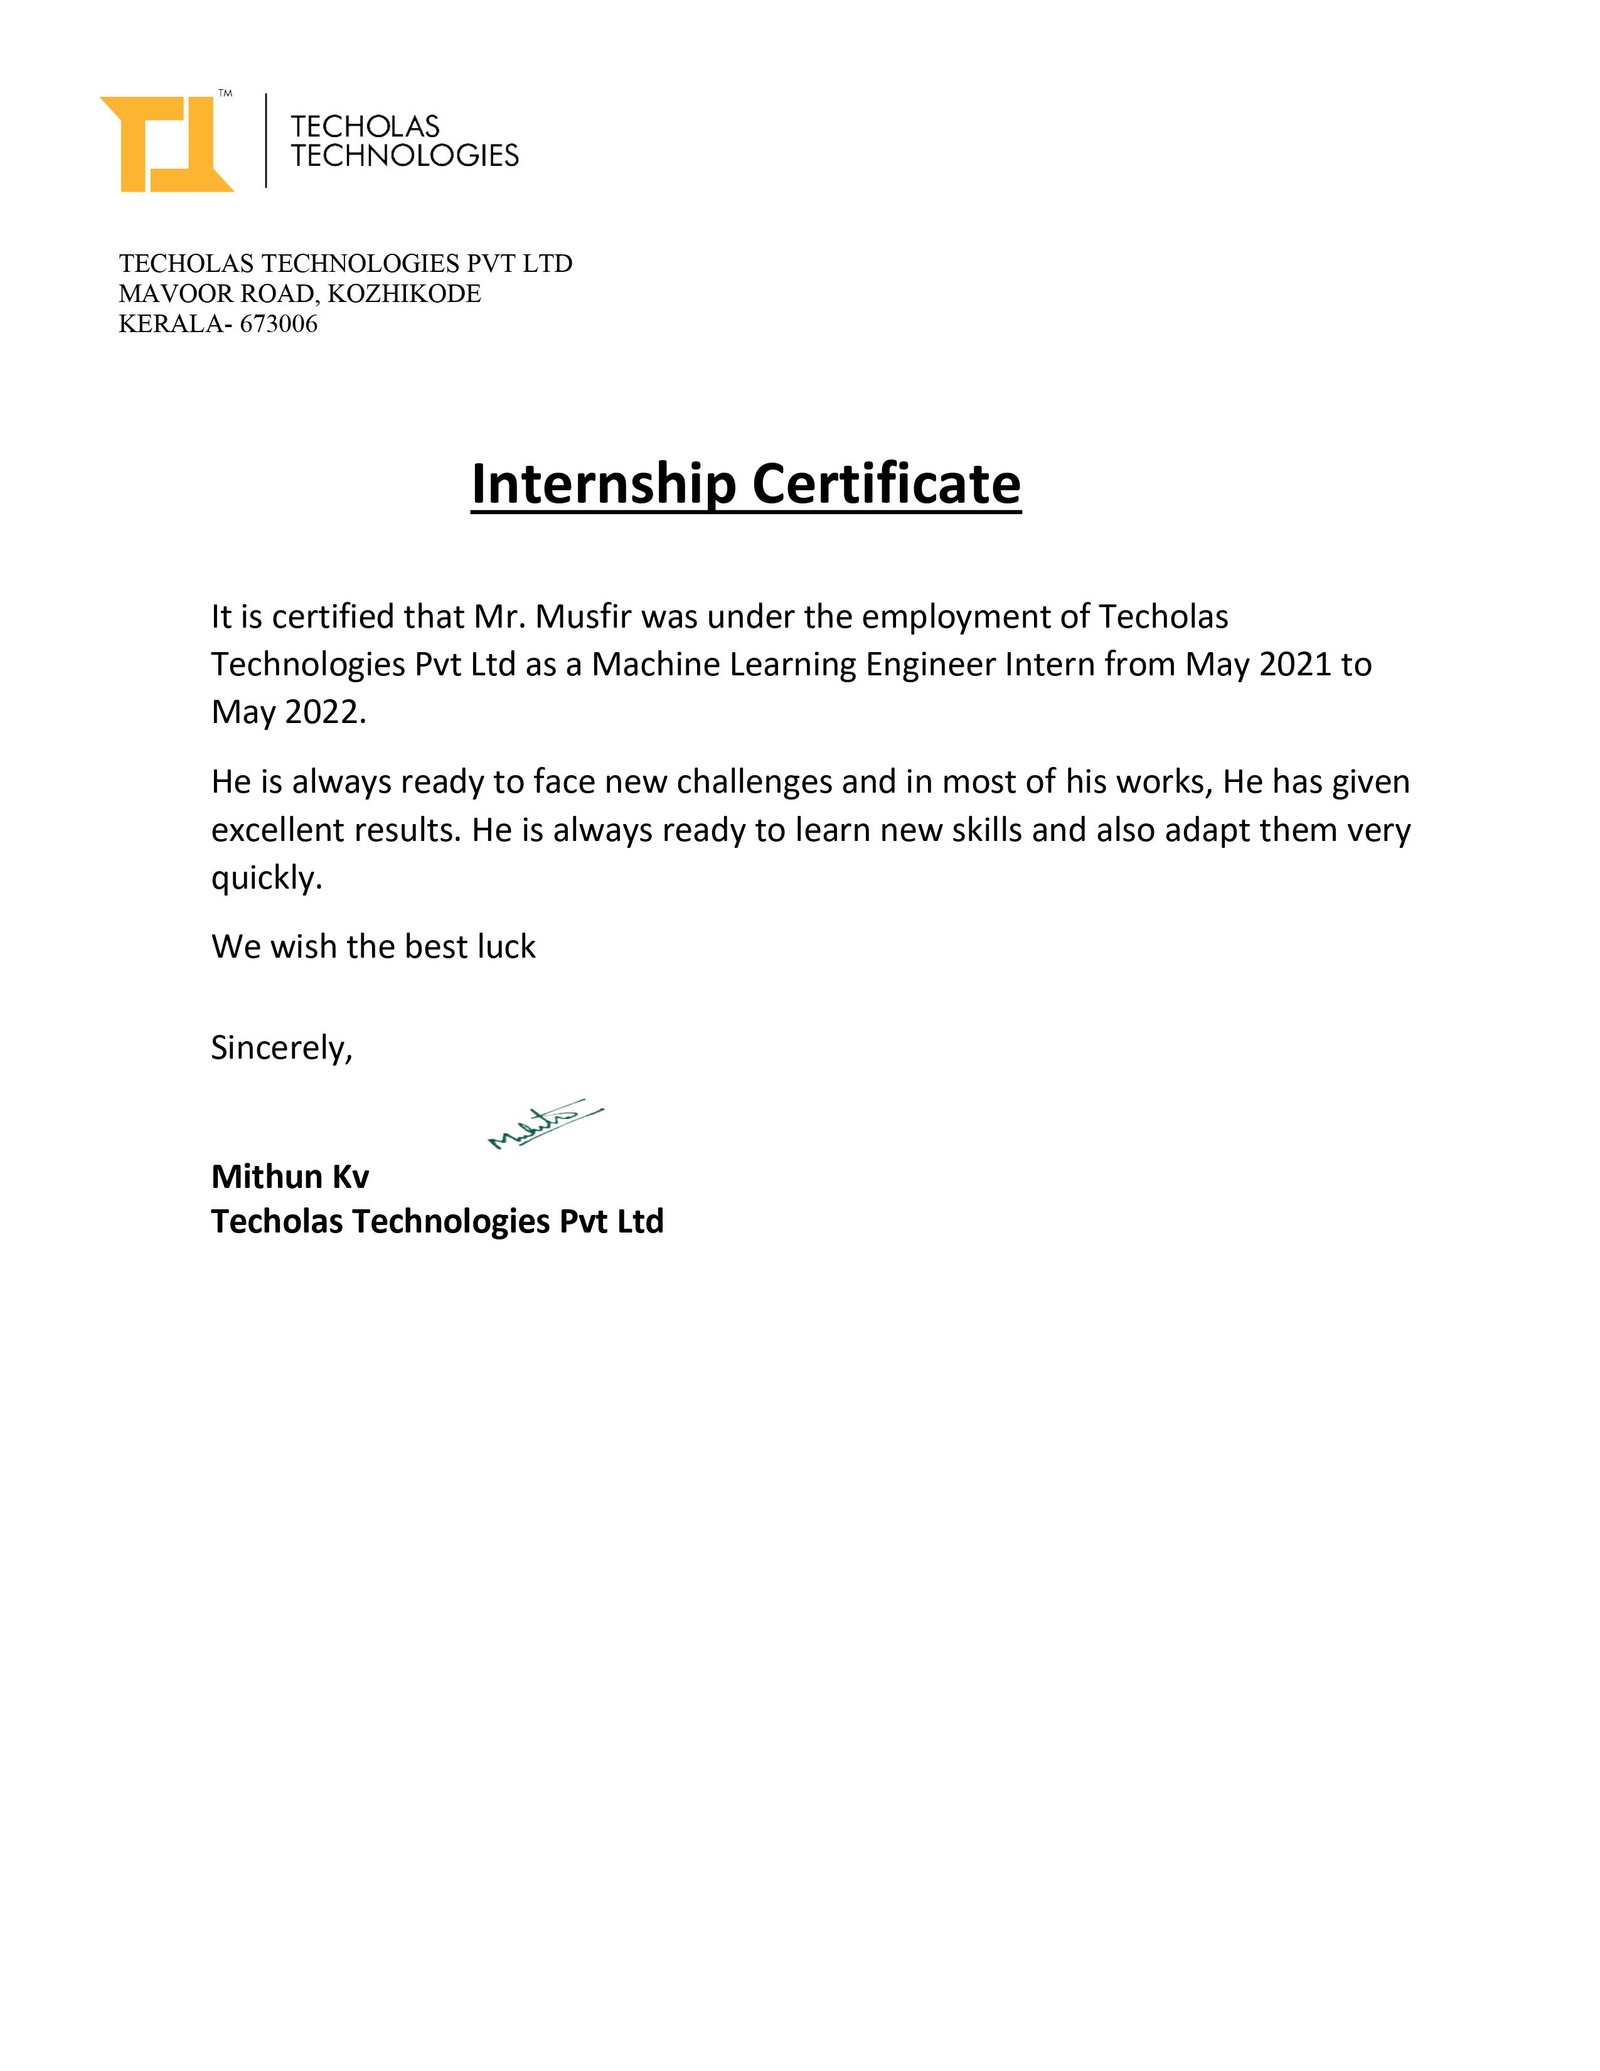 AWS Internship Certification in Kochi and Calicut